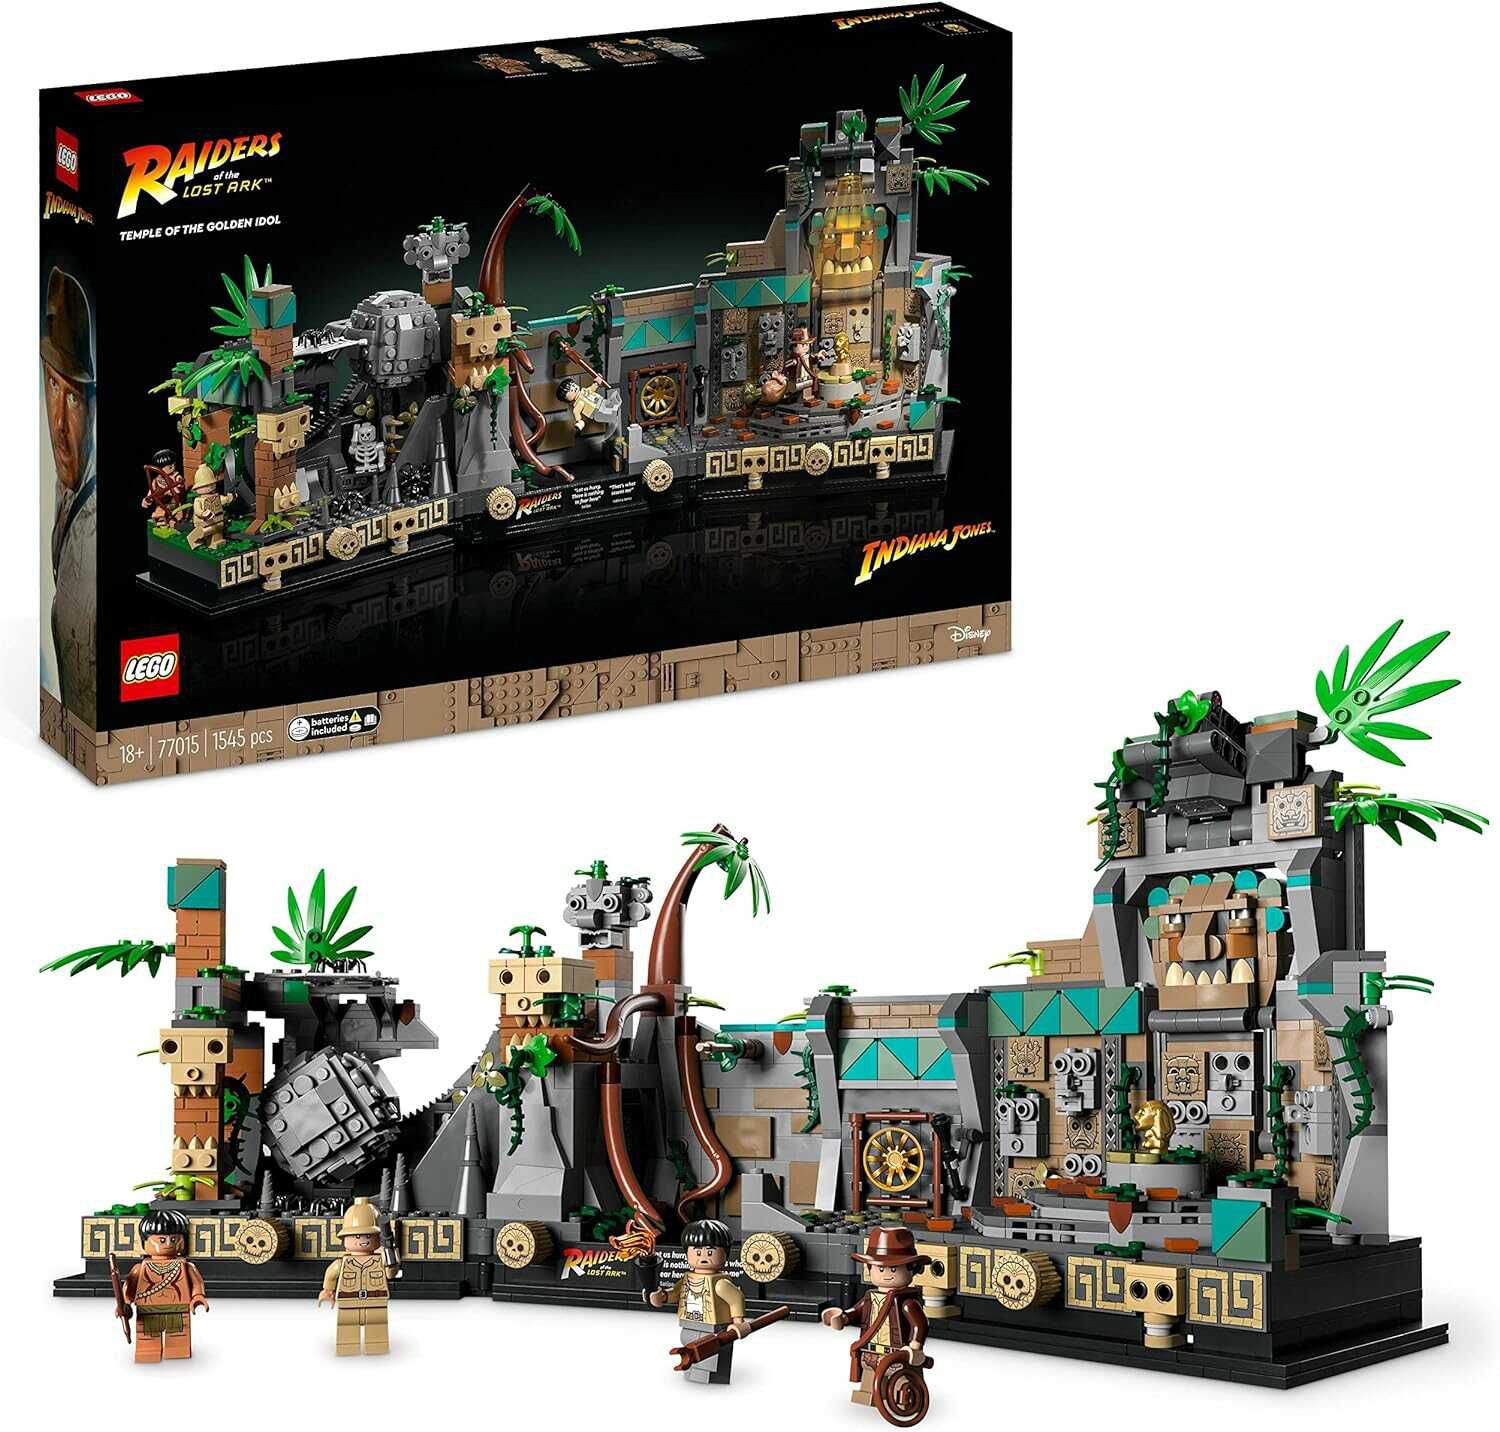 Lego Indiana Jones 77015 Tempel des goldenen Götzen für 98,90€ statt 110,49€